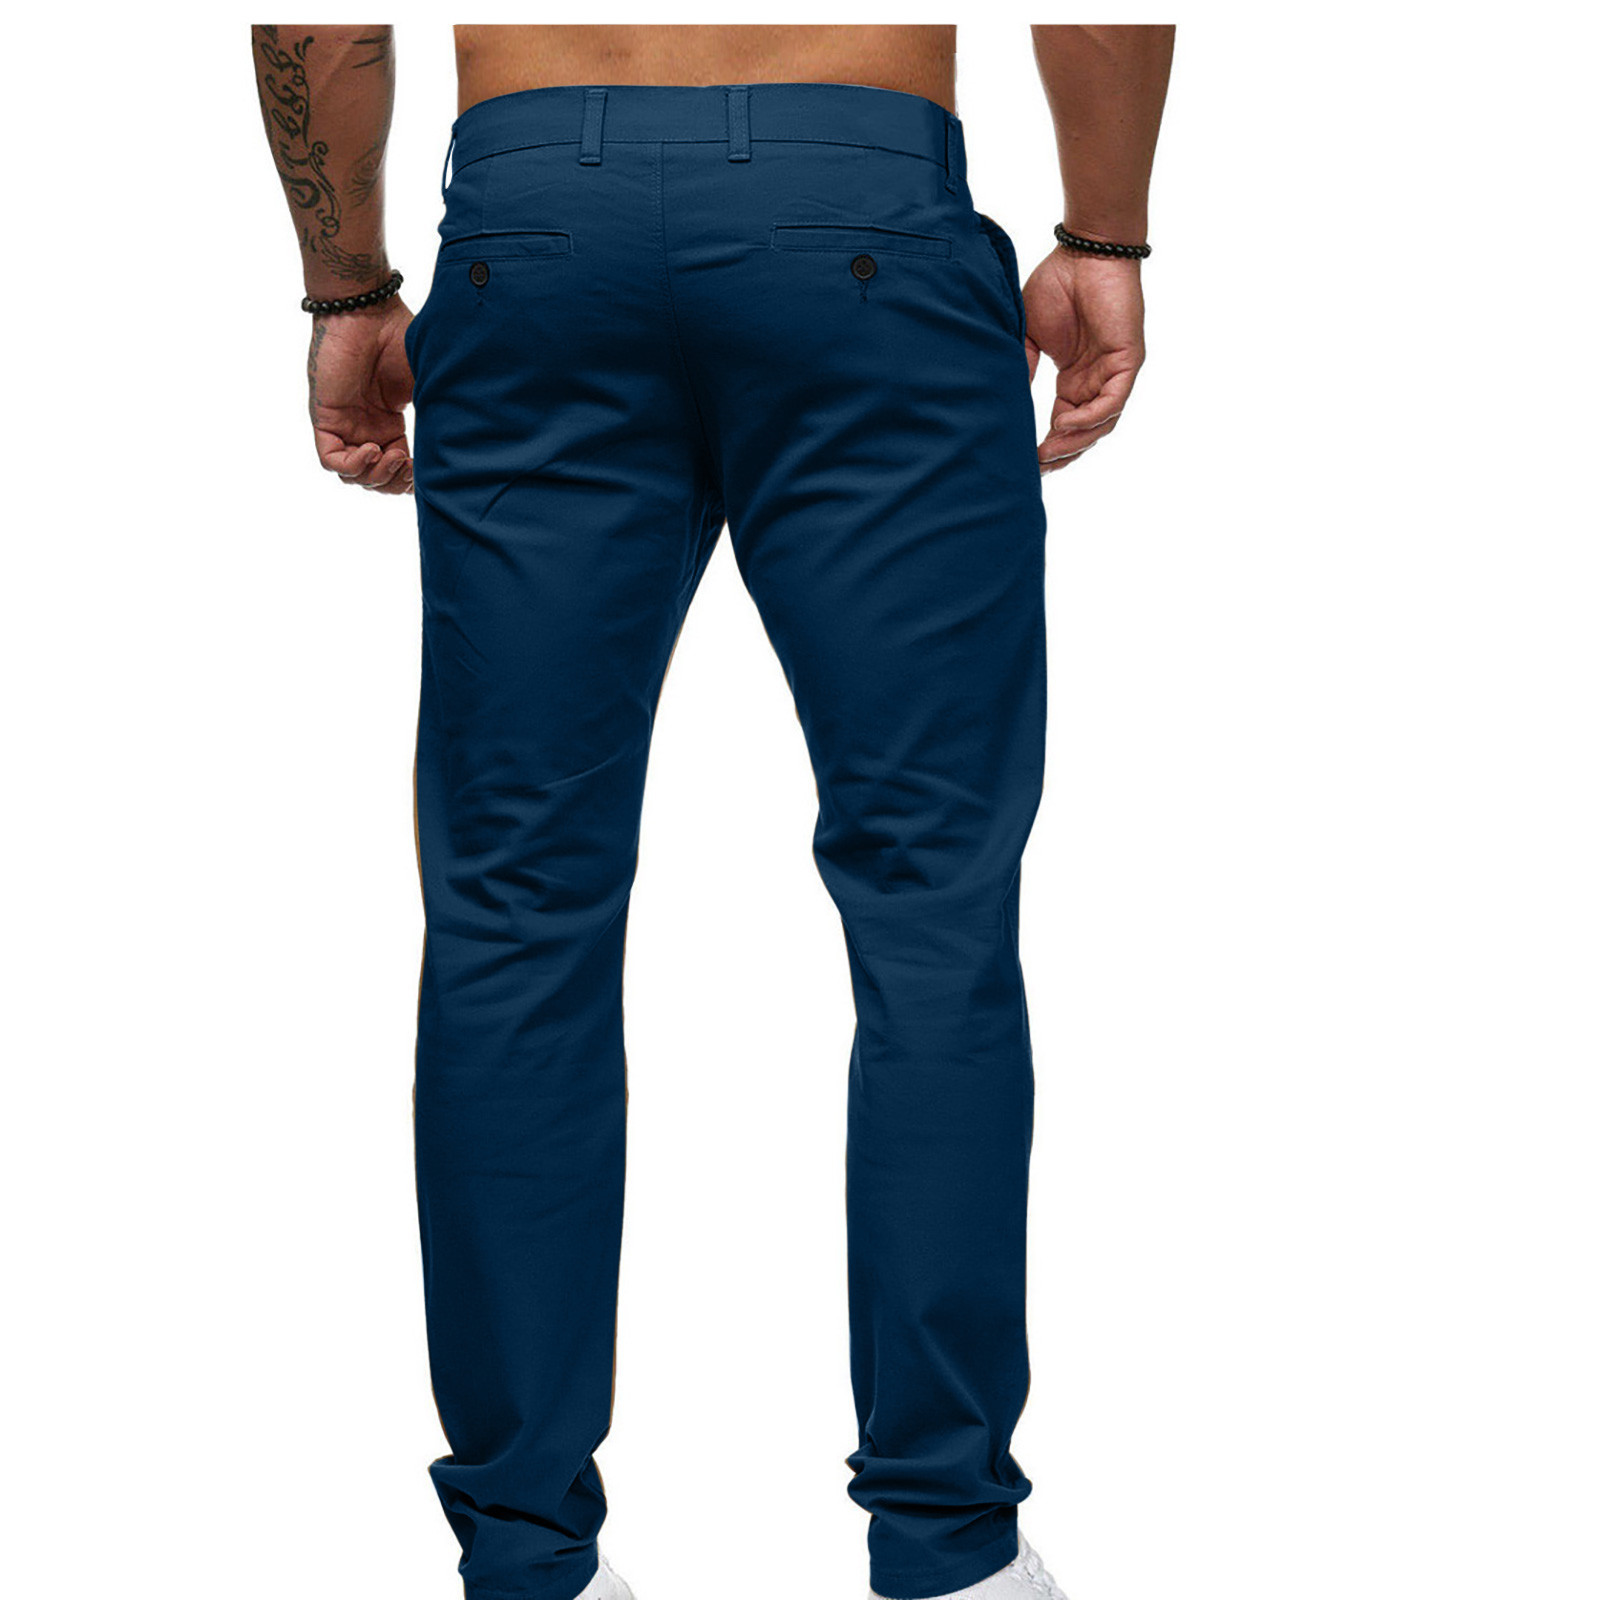 DeHolifer Mens Casual Chinos Pants Cotton Slacks Elastic Waistband Classic Fit Flat Front Khaki Pant Navy L - image 5 of 5